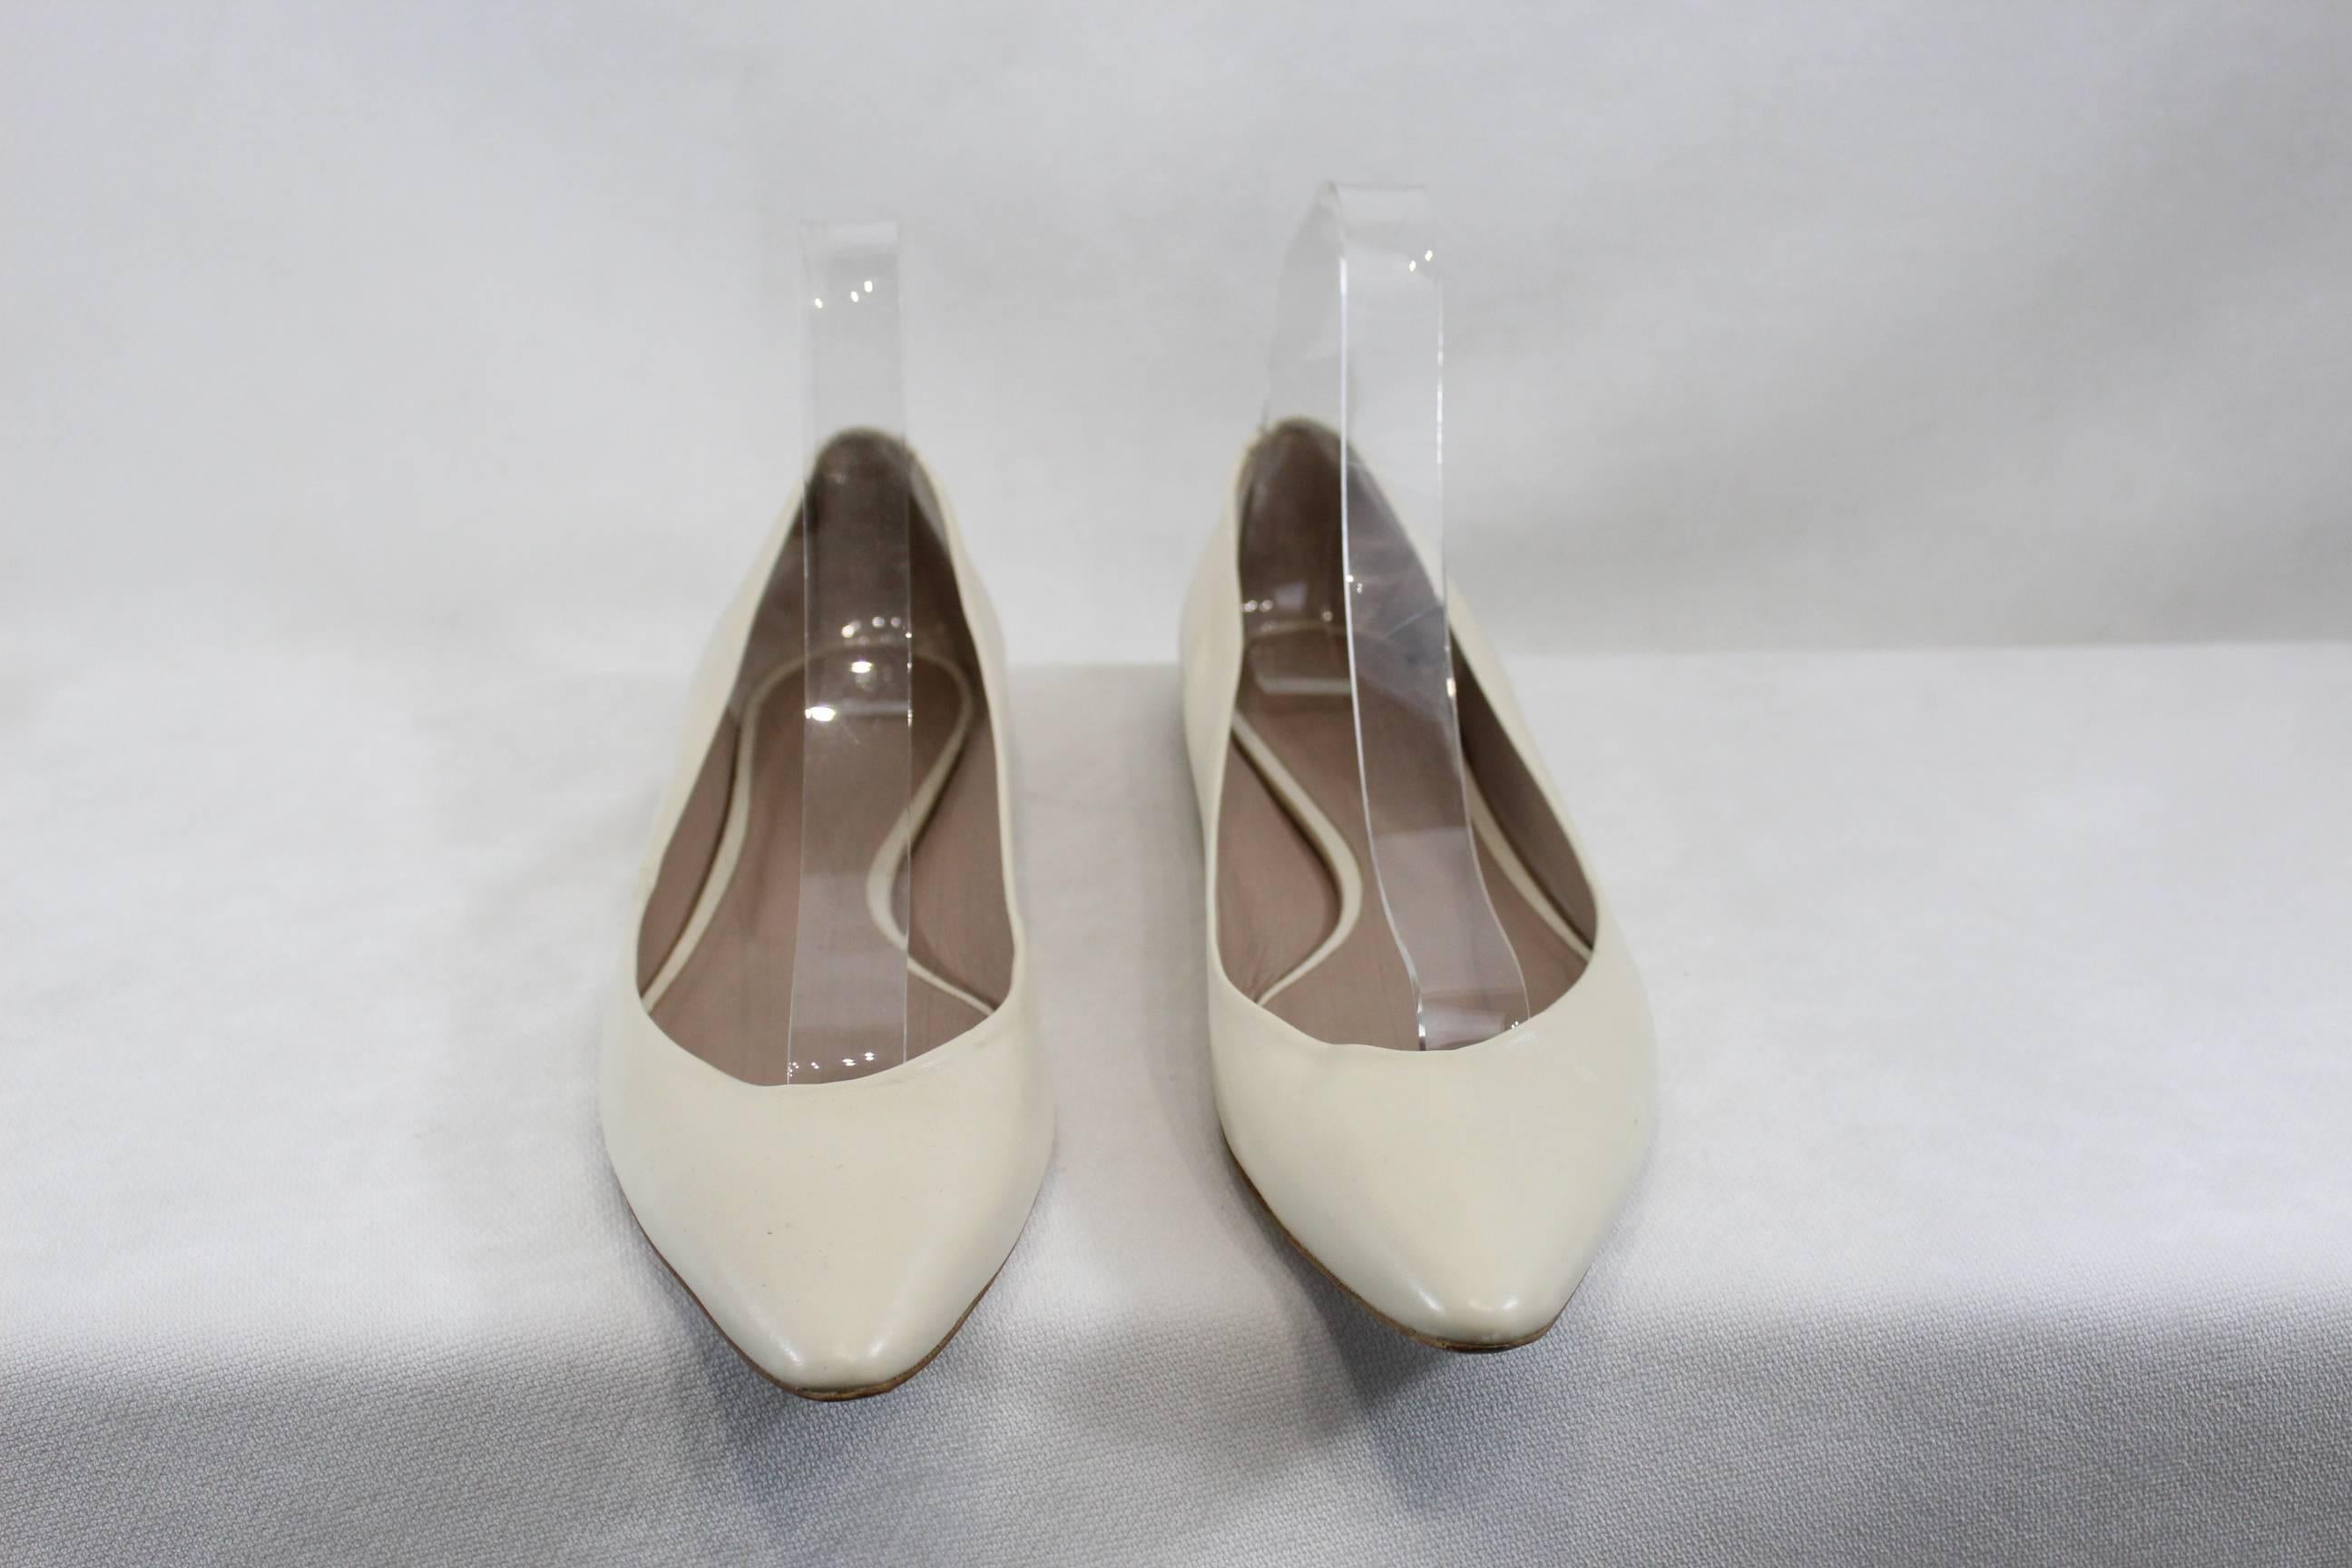 Brown 2016 Chloe Flat Shoes Size 7, 5. Retail price 470$